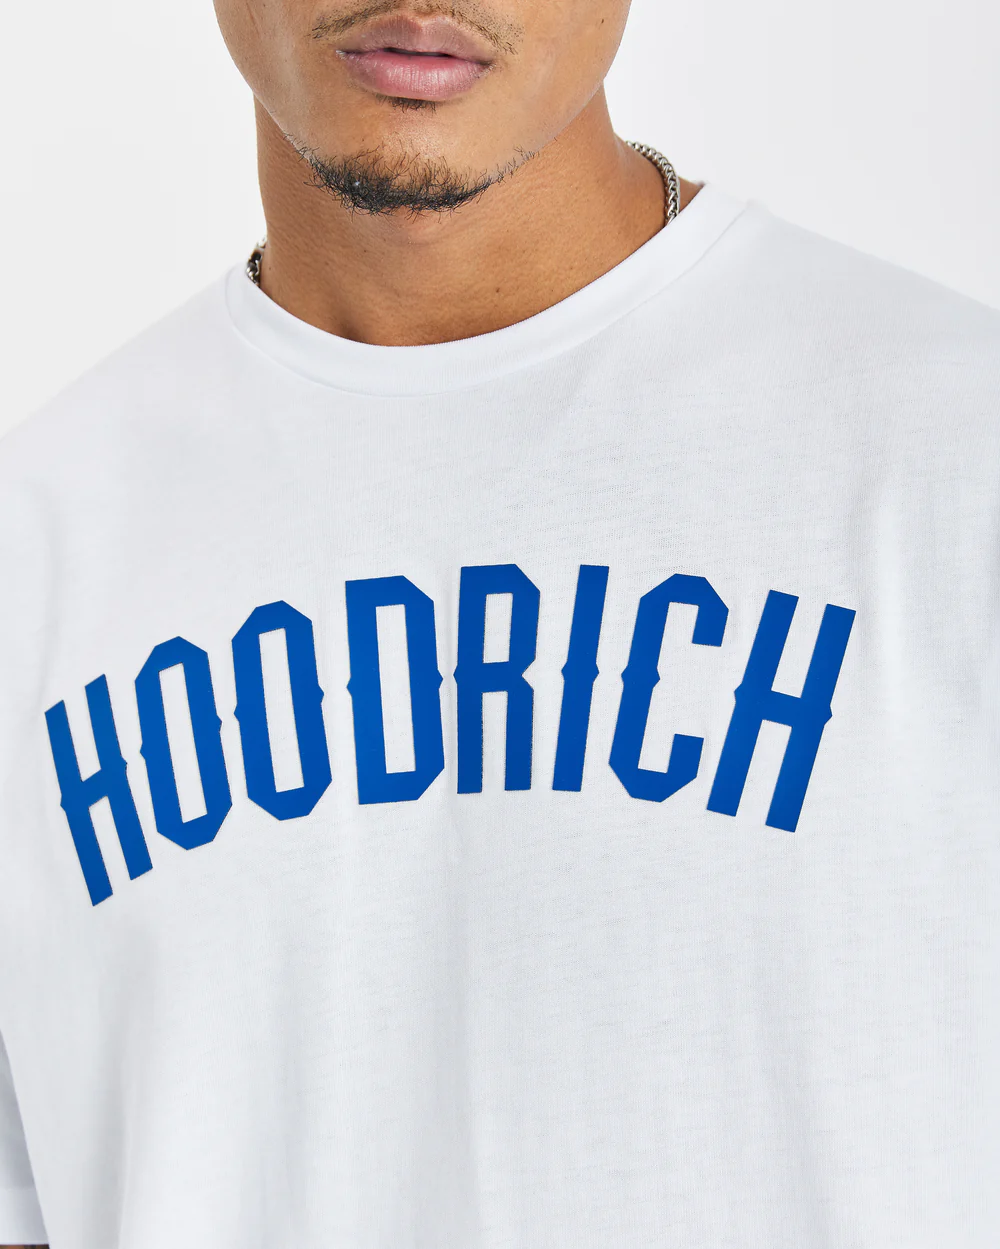 Hoodrich OG Tycoon T-Shirt & Shorts Set White/Blue - Urban Menswear